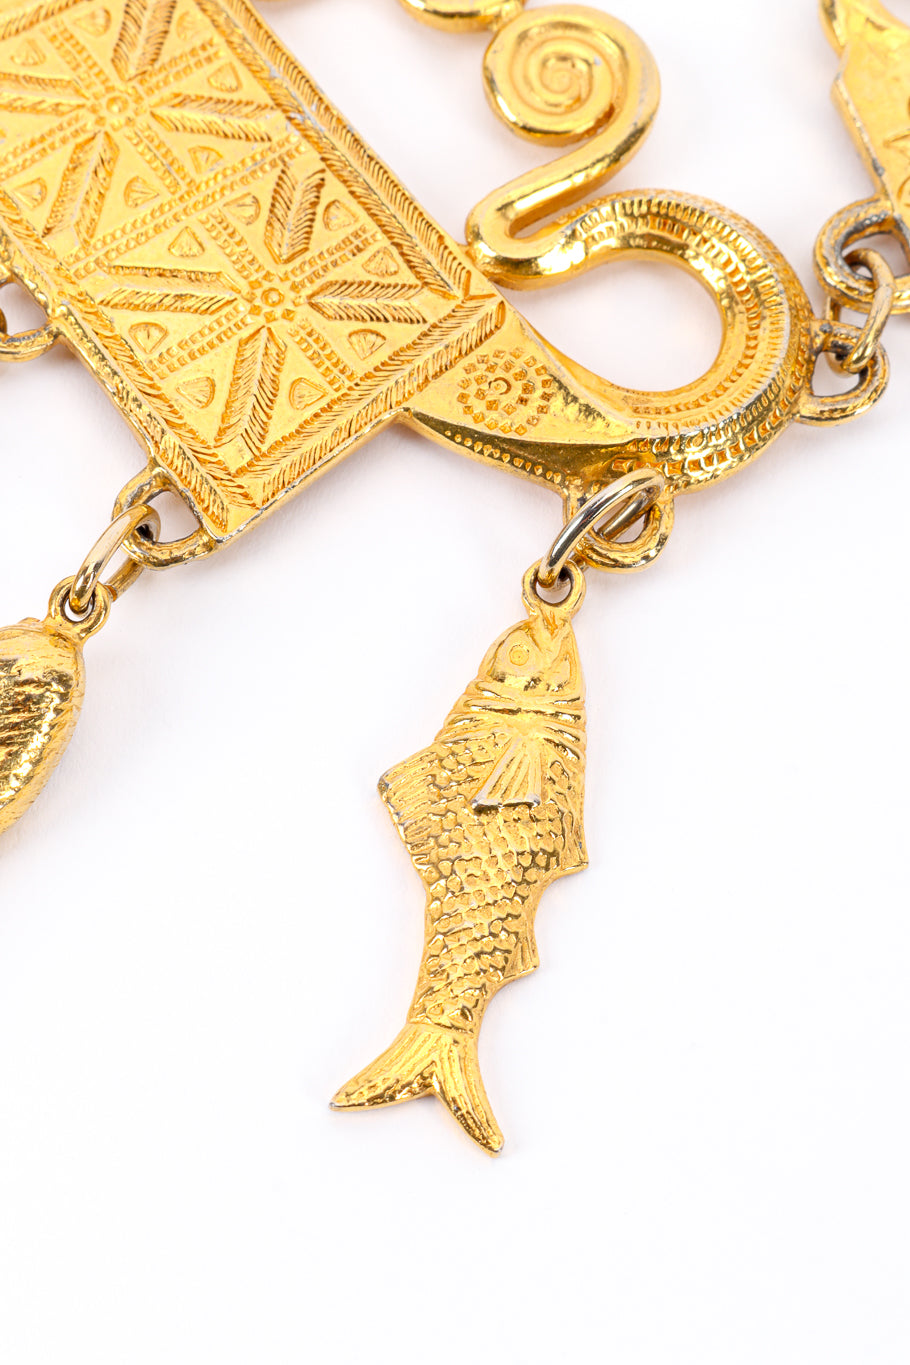 Etruscan Revival Amulet Necklace by Alexis Kirk fish charm @recessla